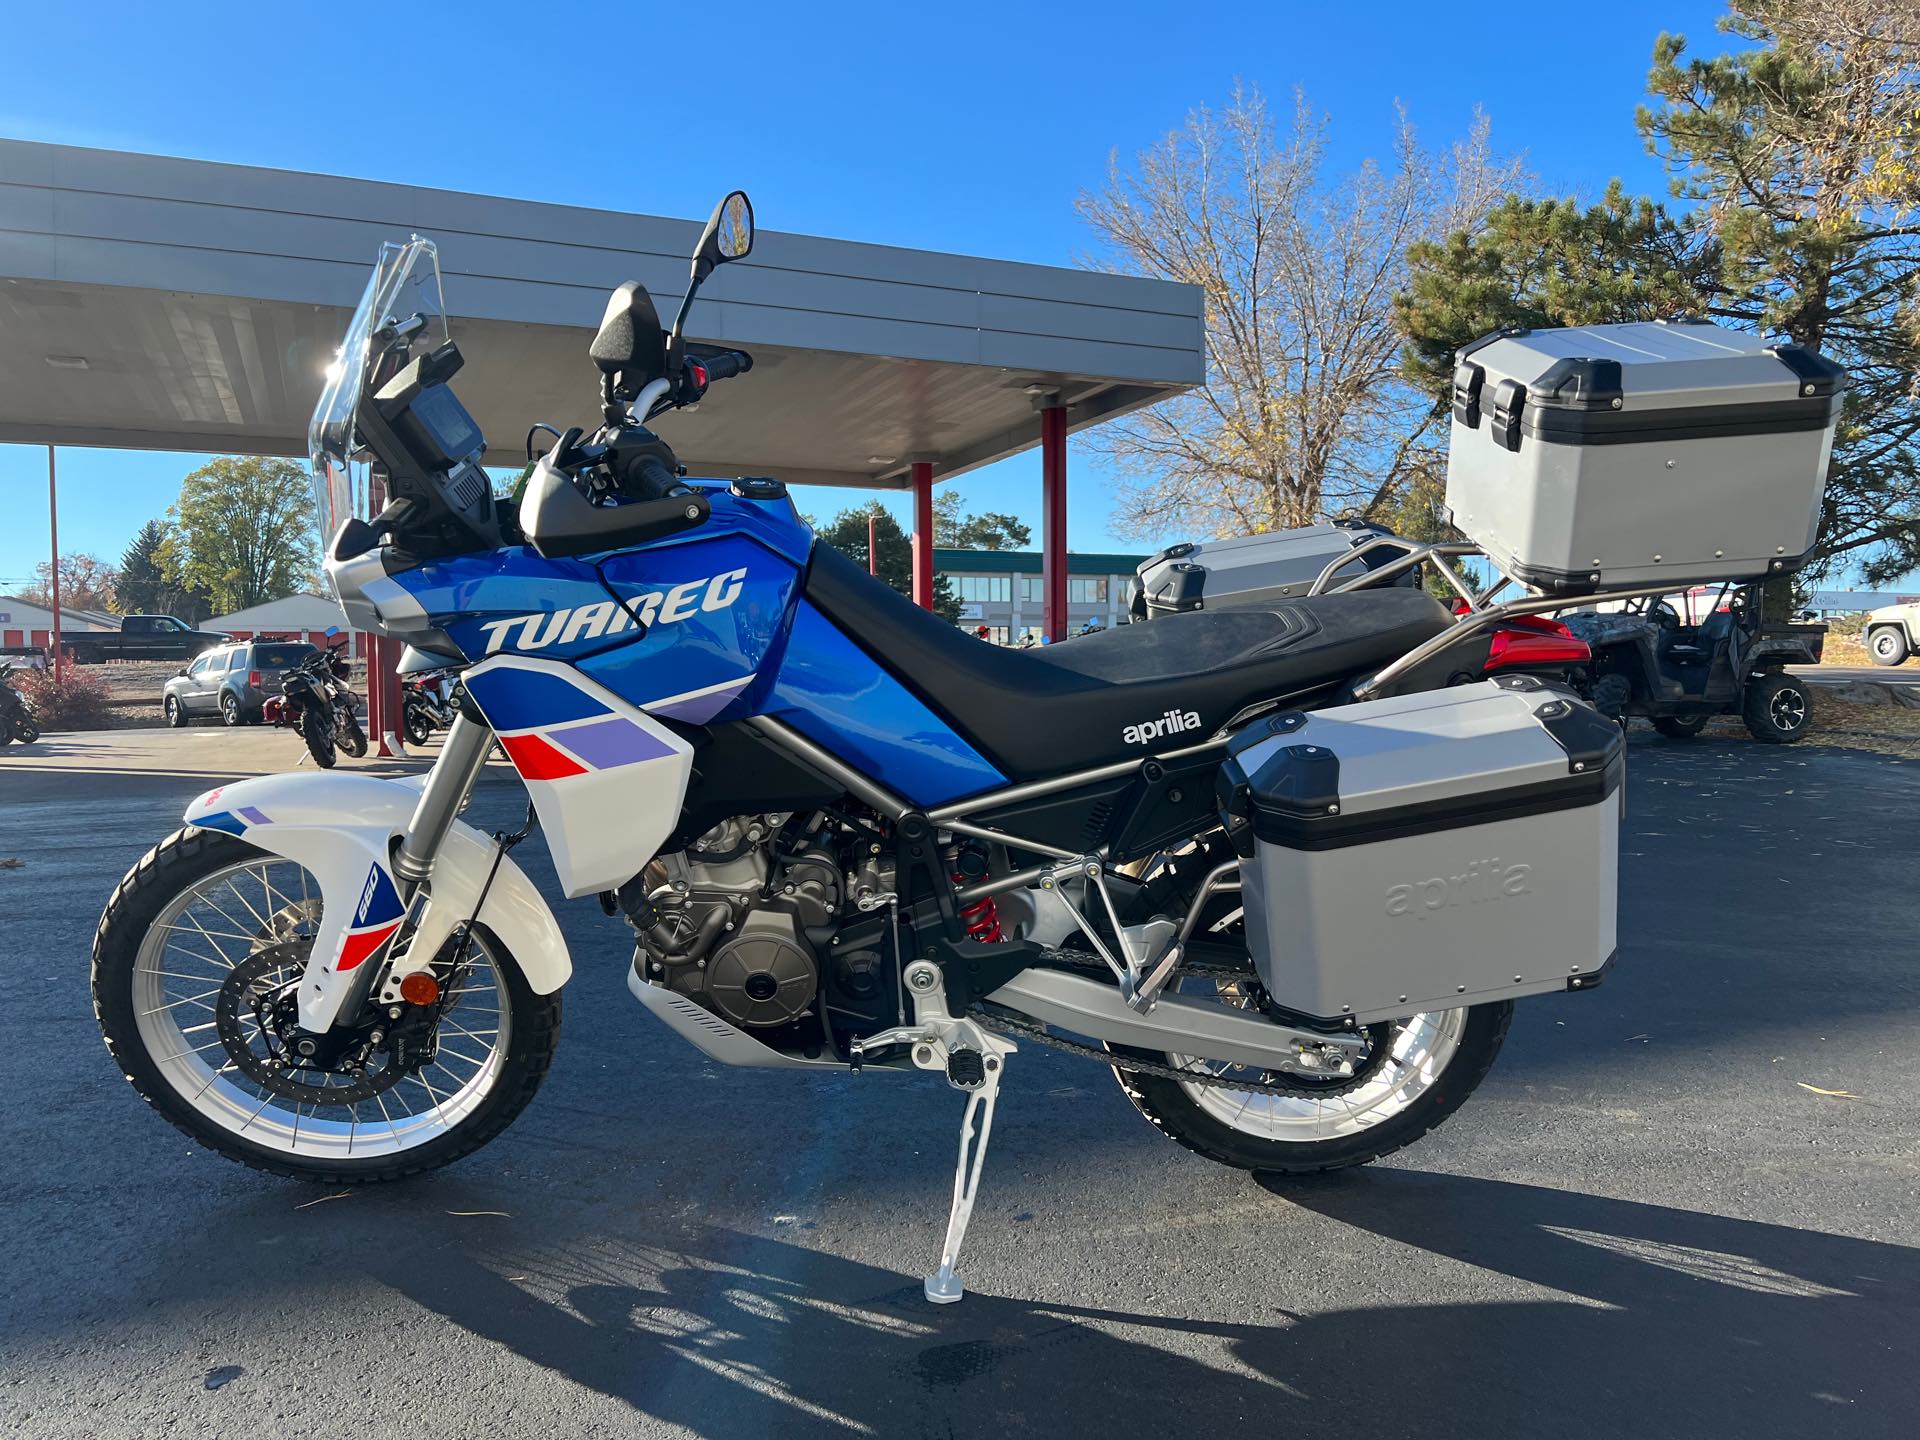 2022 Aprilia Tuareg 660 at Aces Motorcycles - Fort Collins